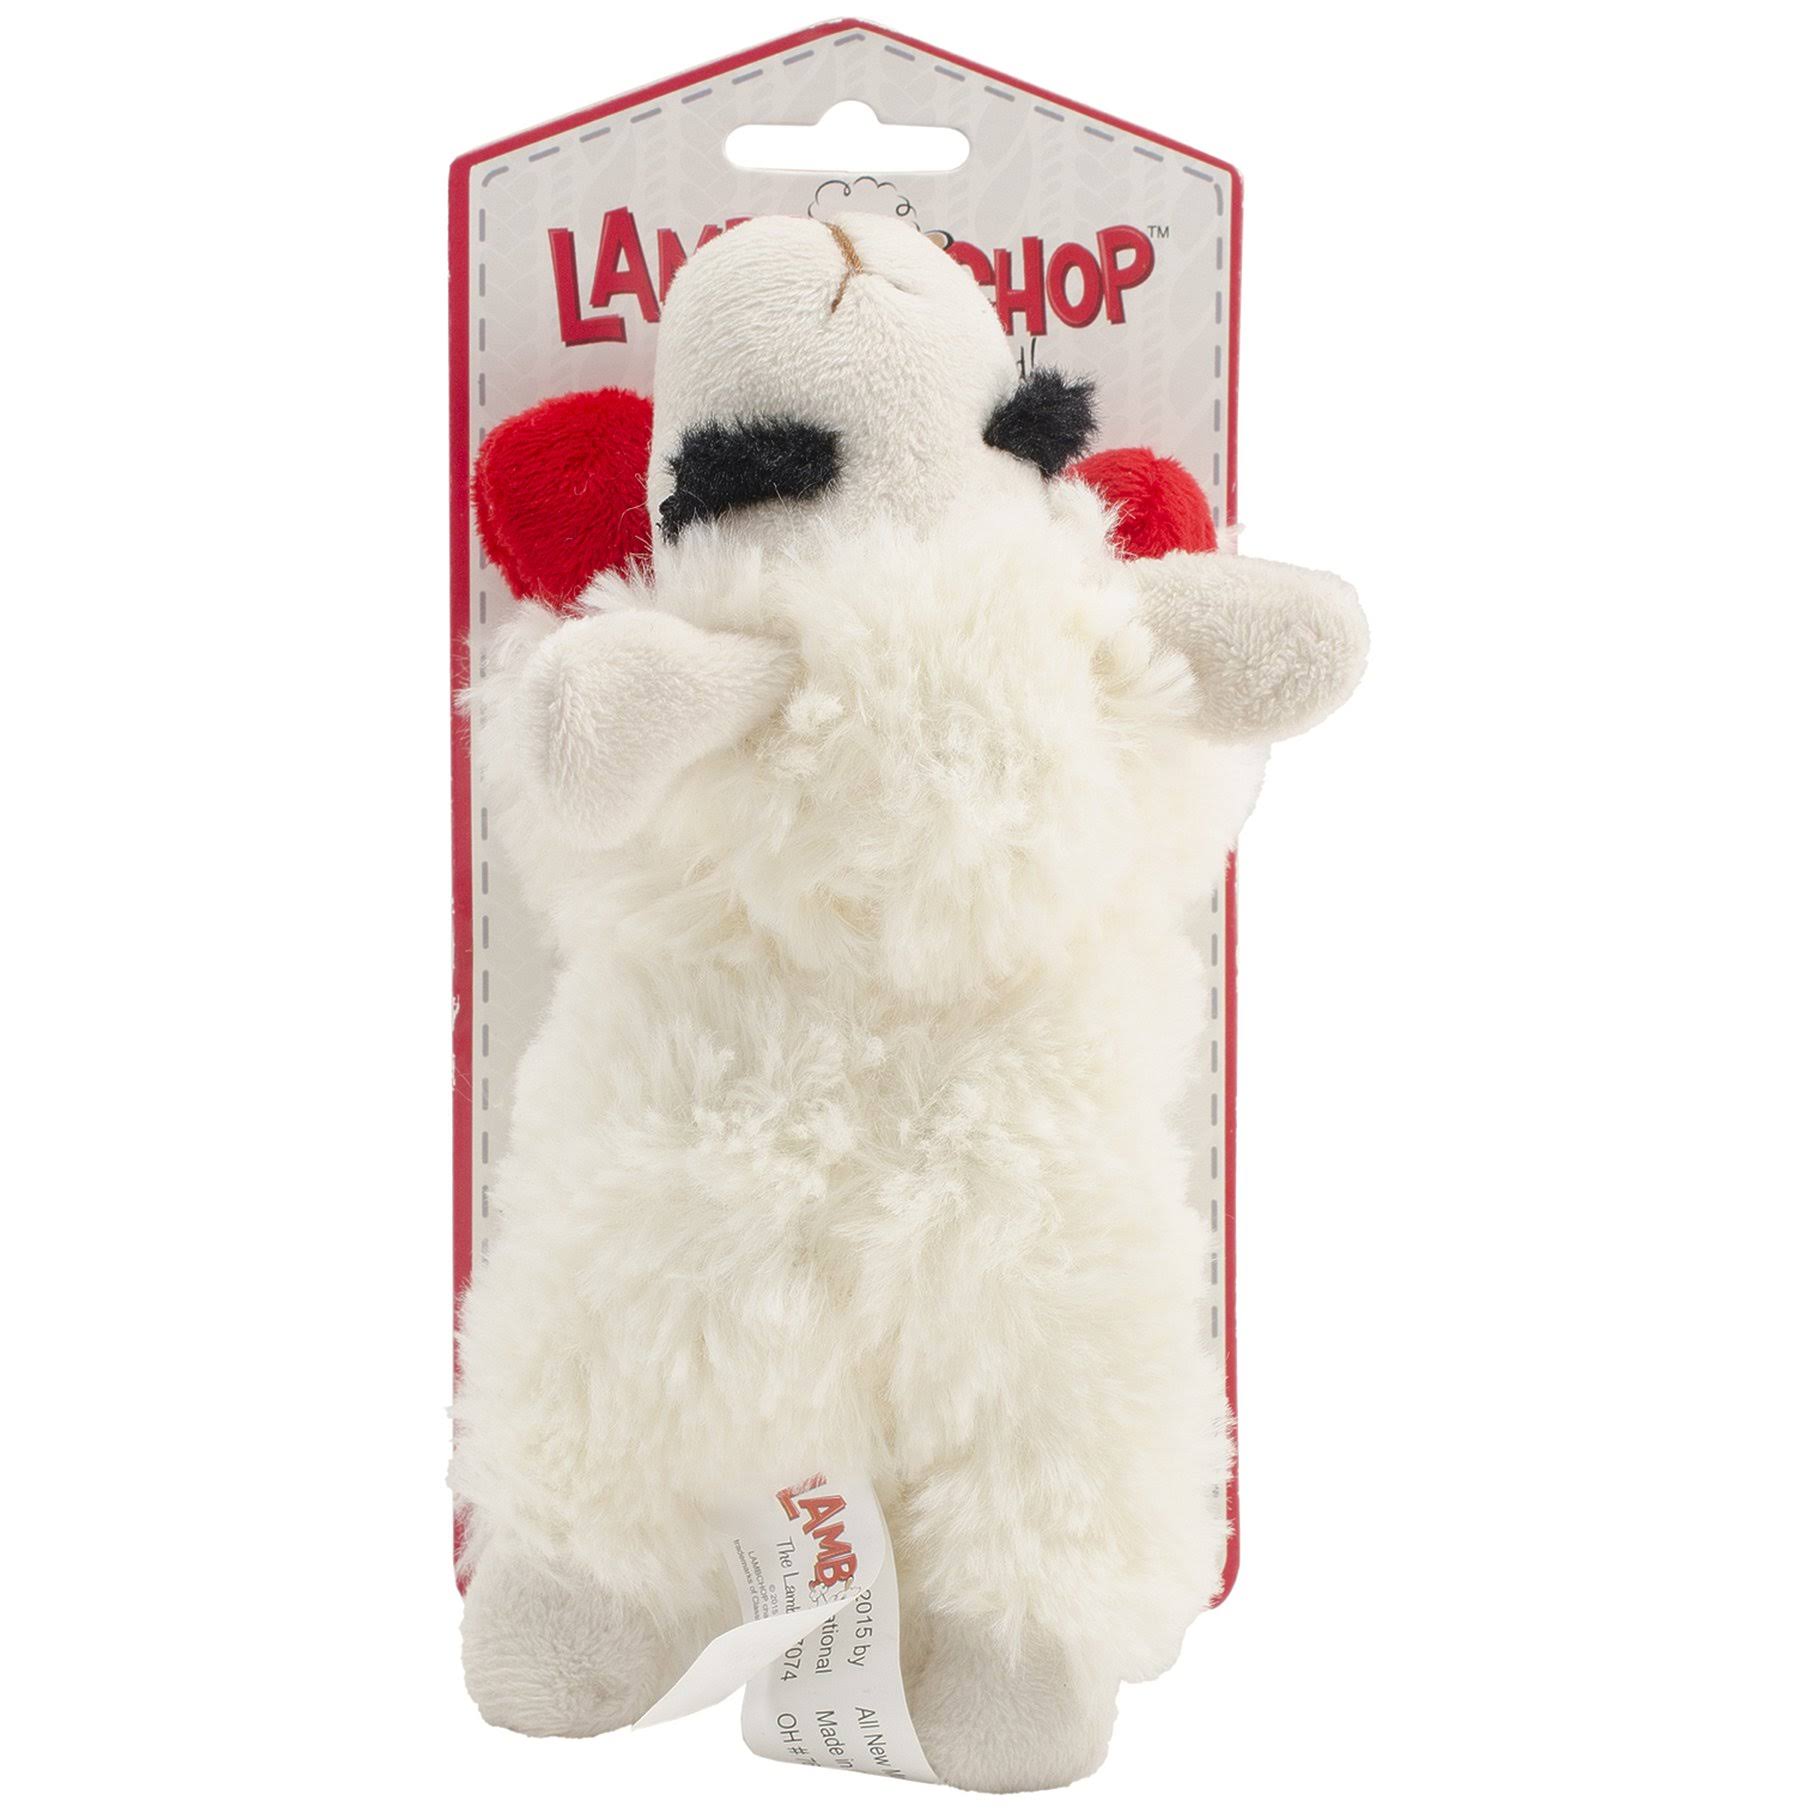 Multi-Pet International Lambchop Plush Squeak Toy